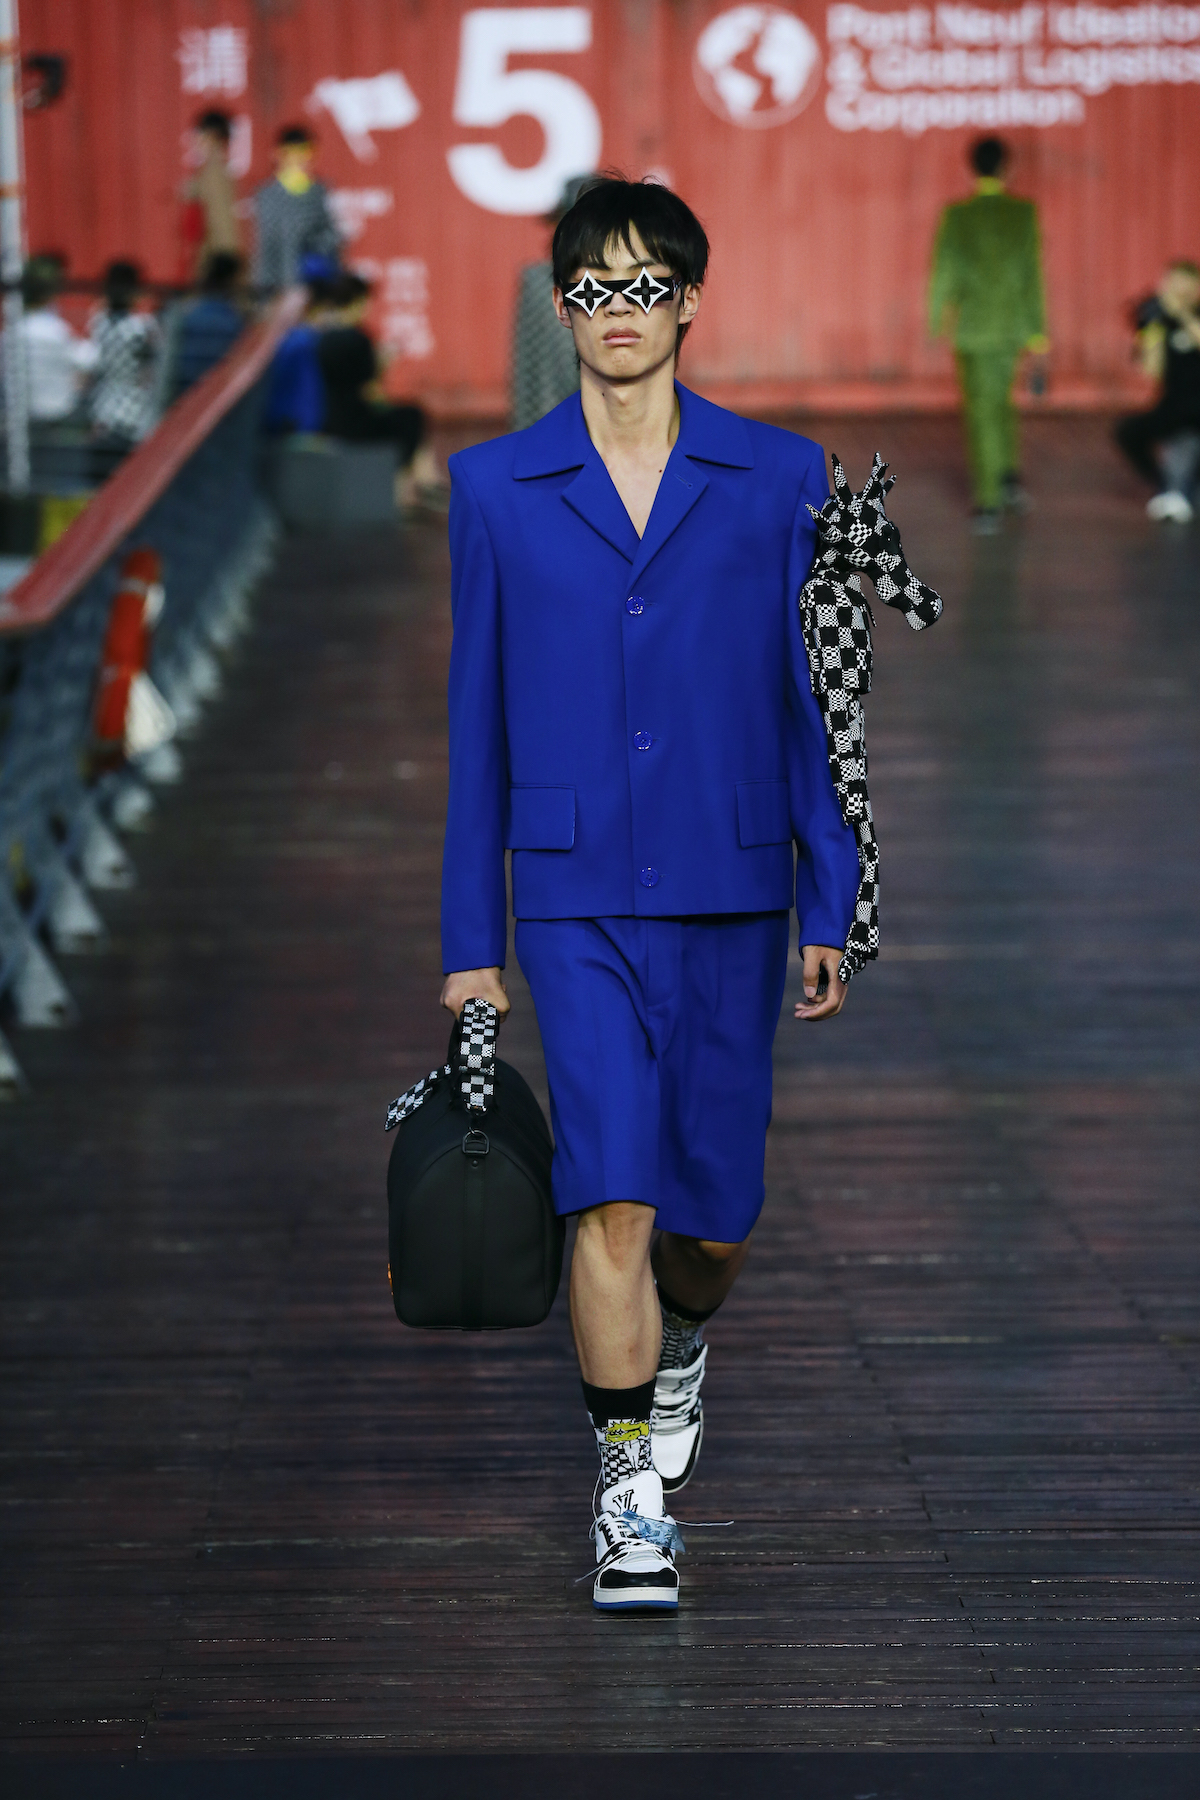 Louis Vuitton Menswear show SS21 - The Glass Magazine